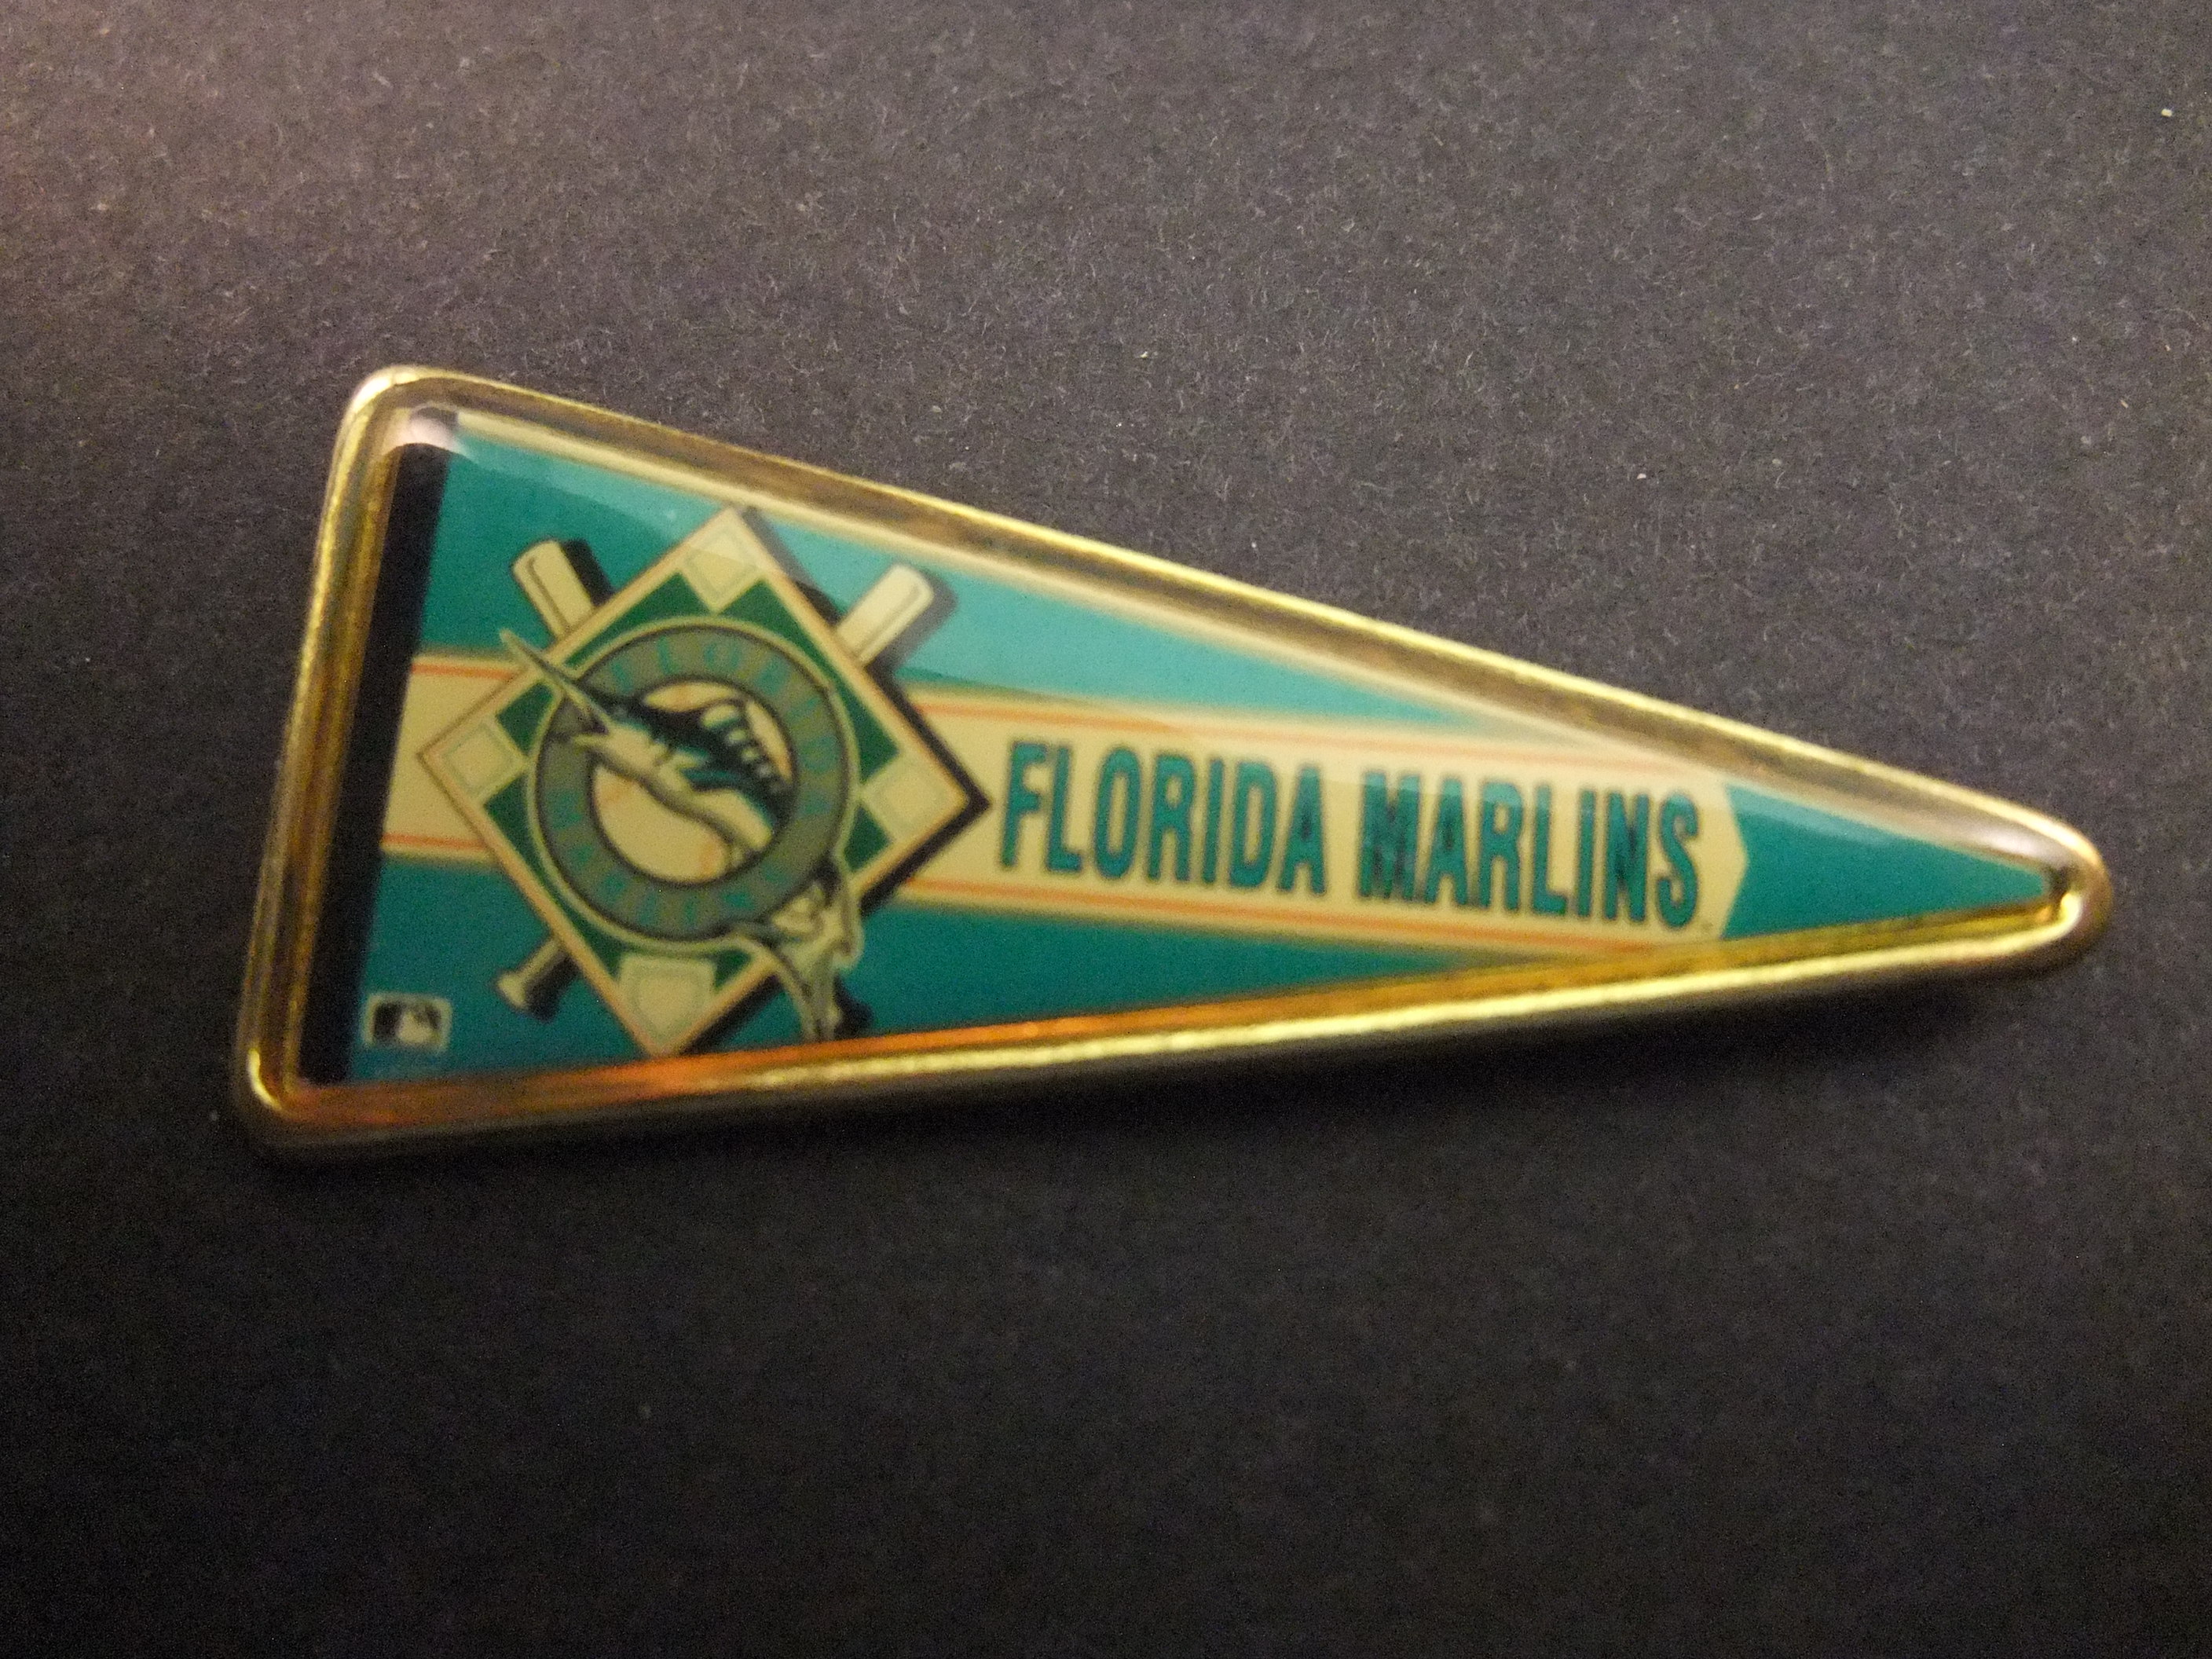 Florida Marlins (Miami Marlins)Amerikaanse honkbalclub MLB